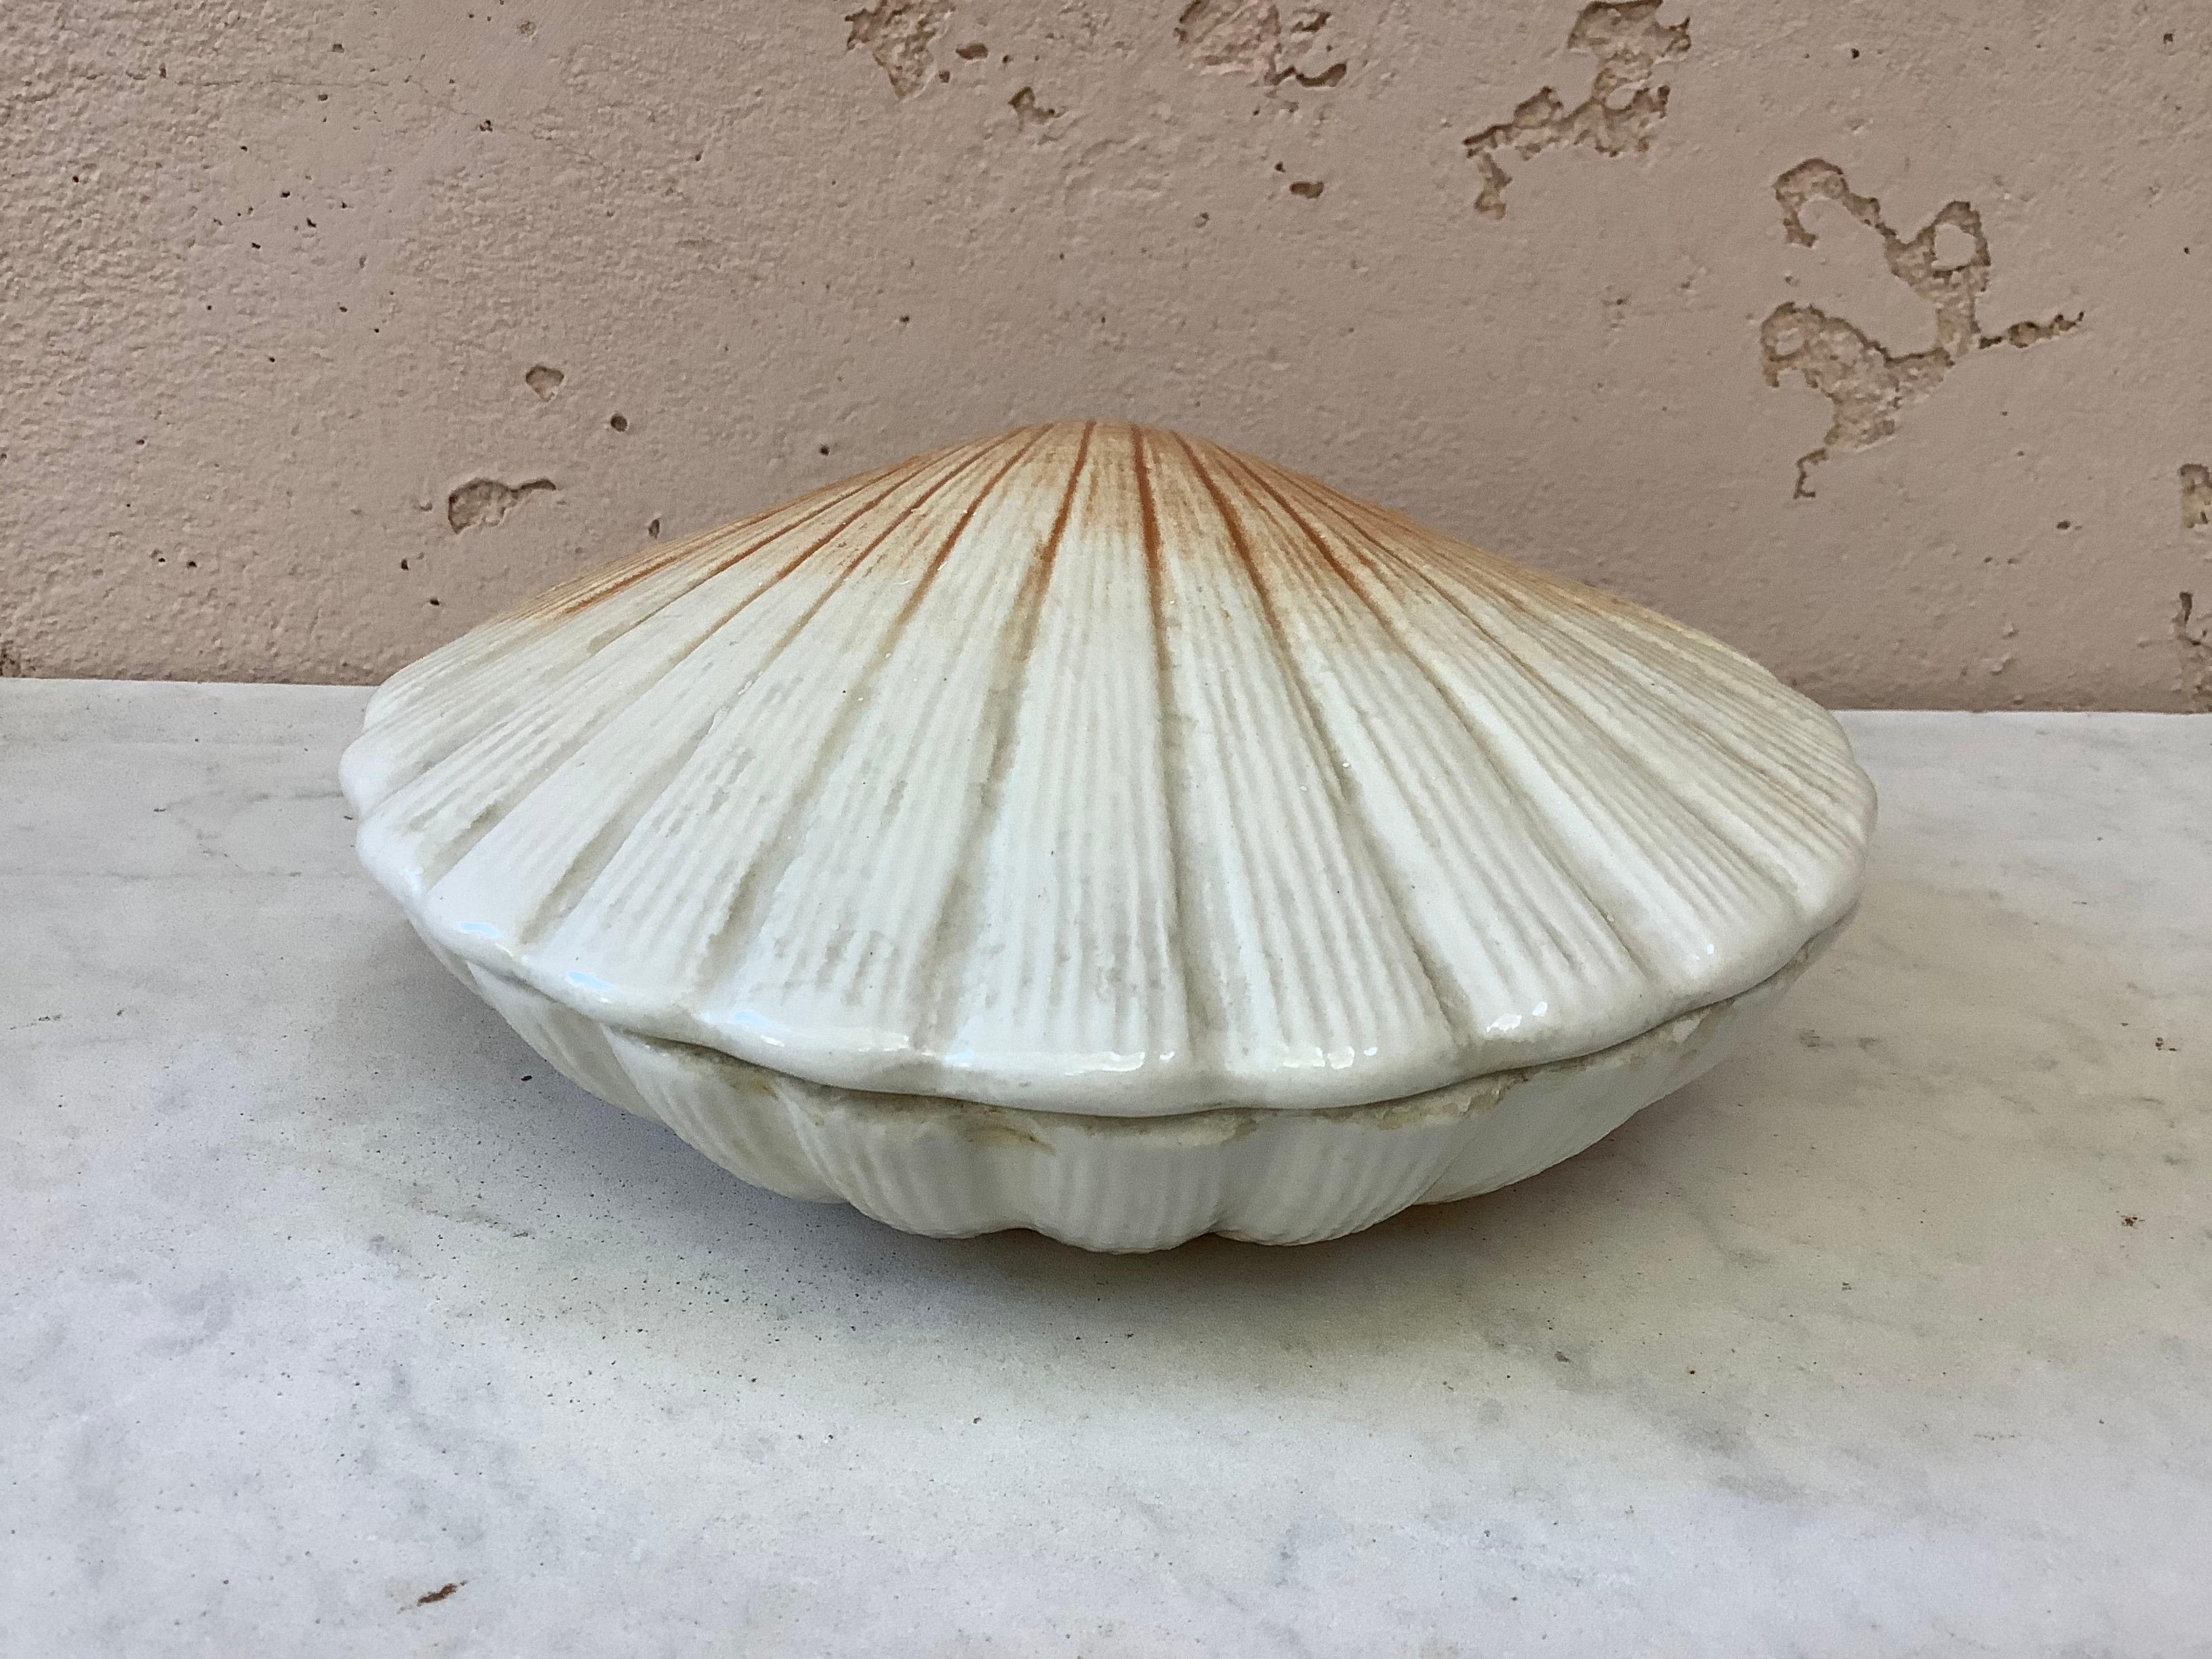 Vintage French Majolica scallop shell tureen signed Caugant, circa 1950.